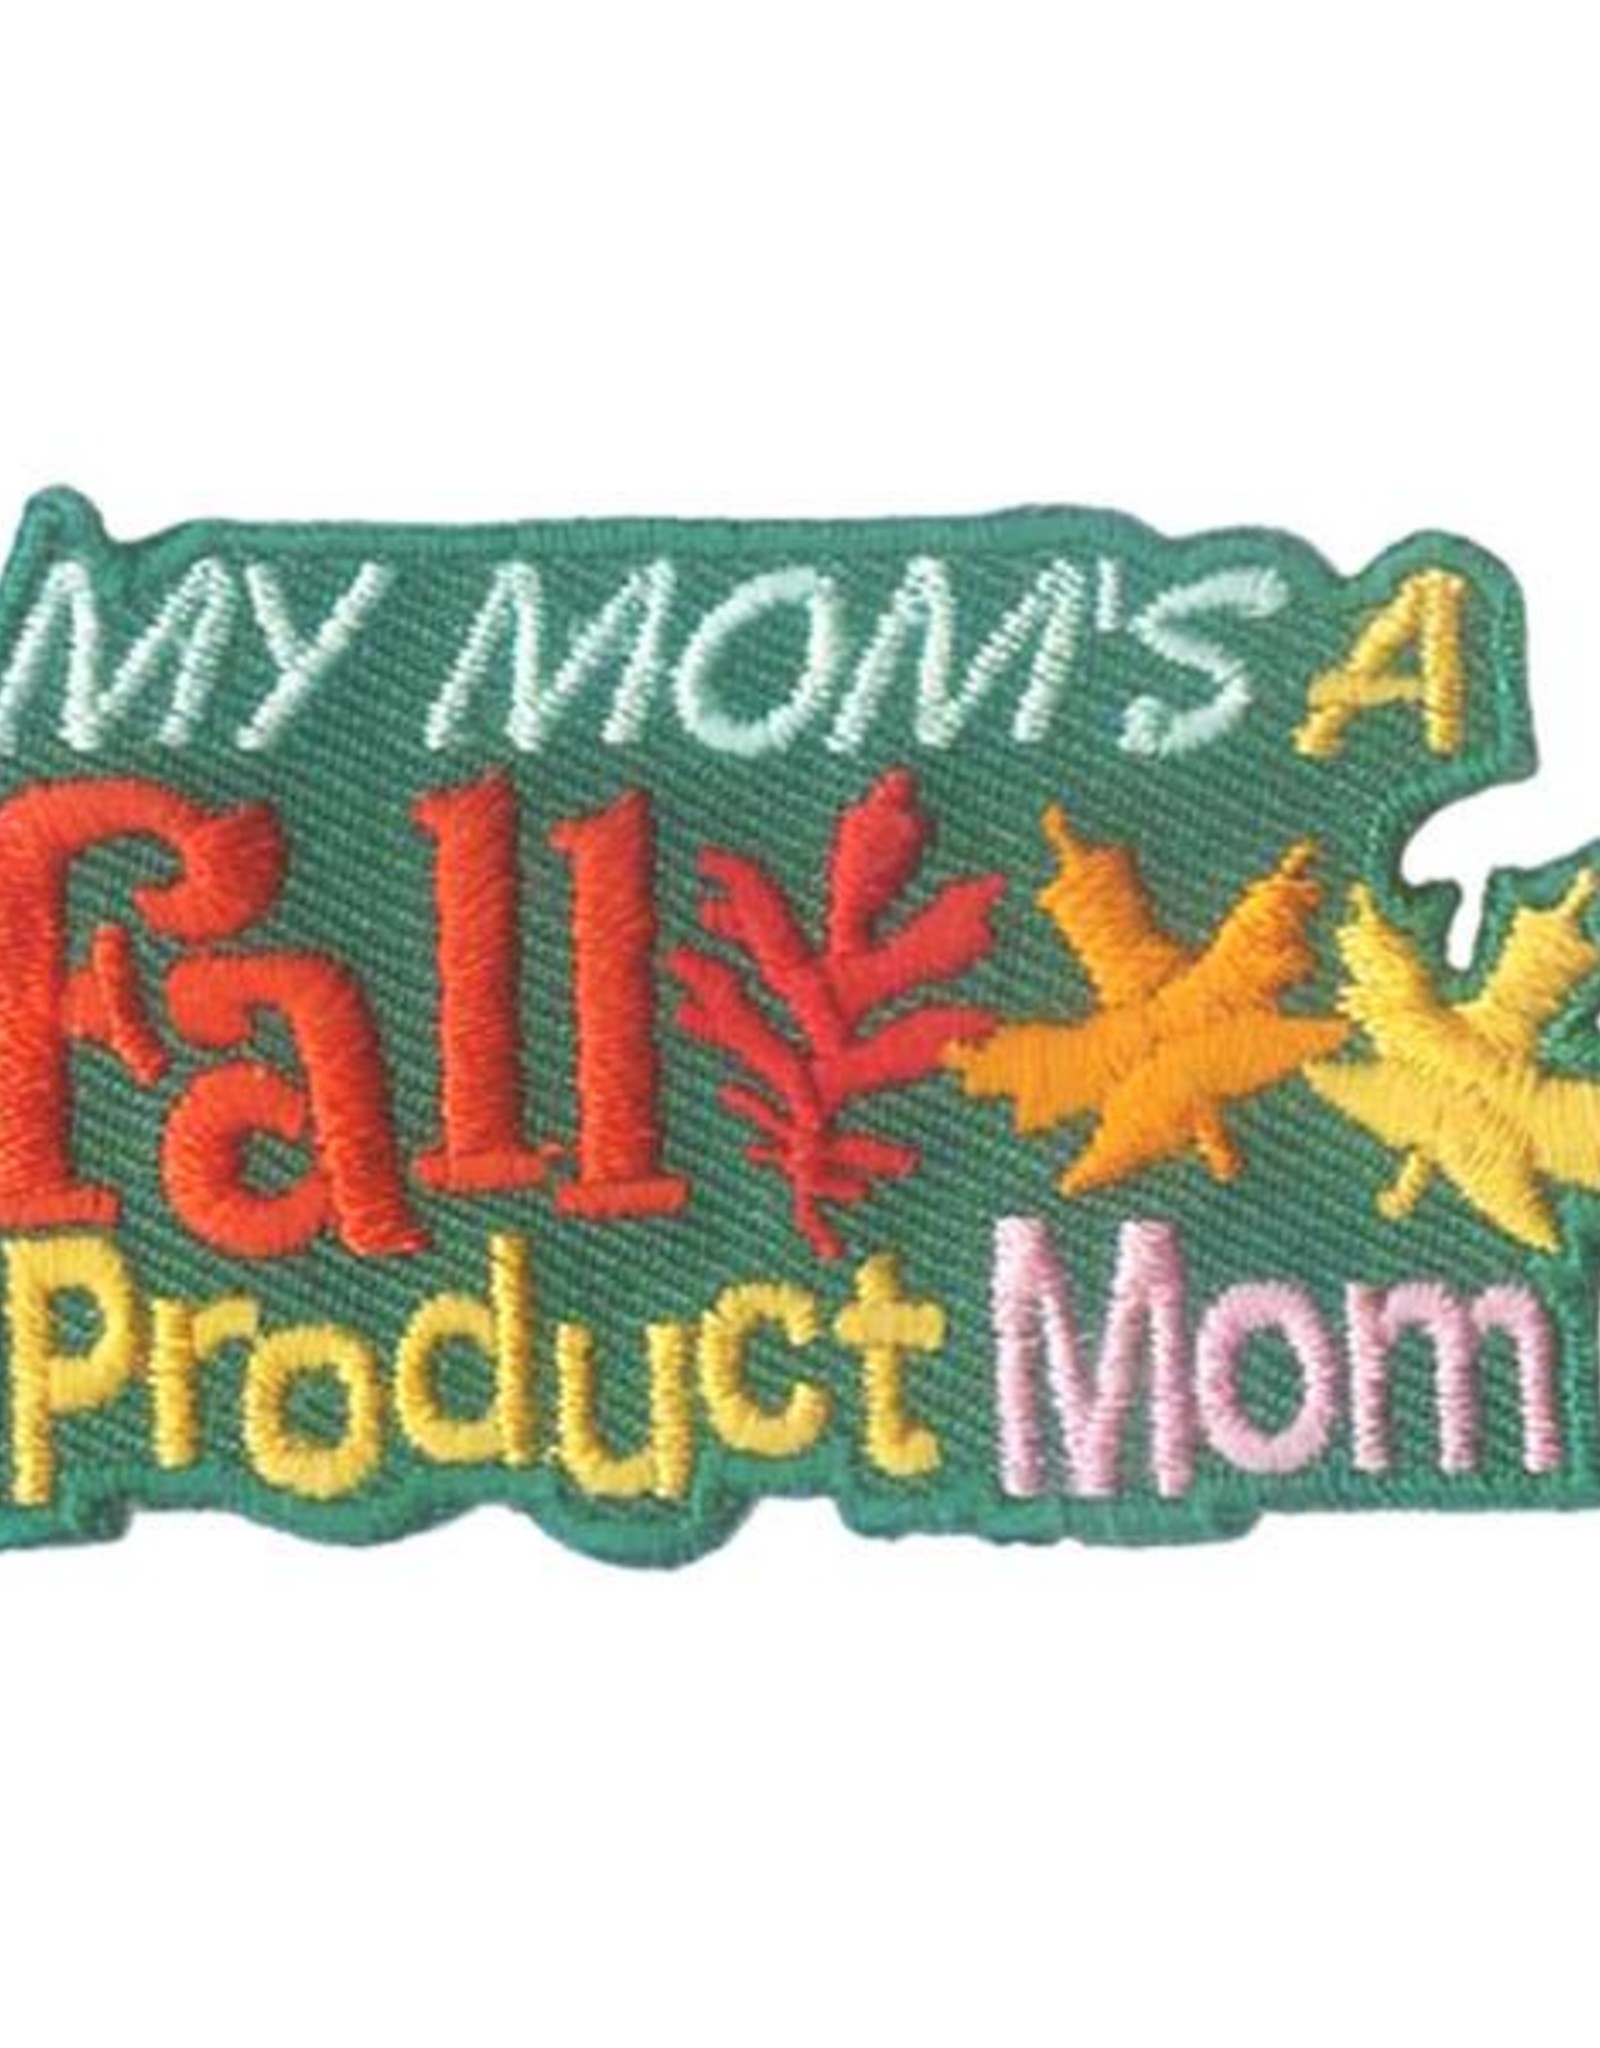 Advantage Emblem & Screen Prnt My Mom Is a Fall Product Mom Fun Patch